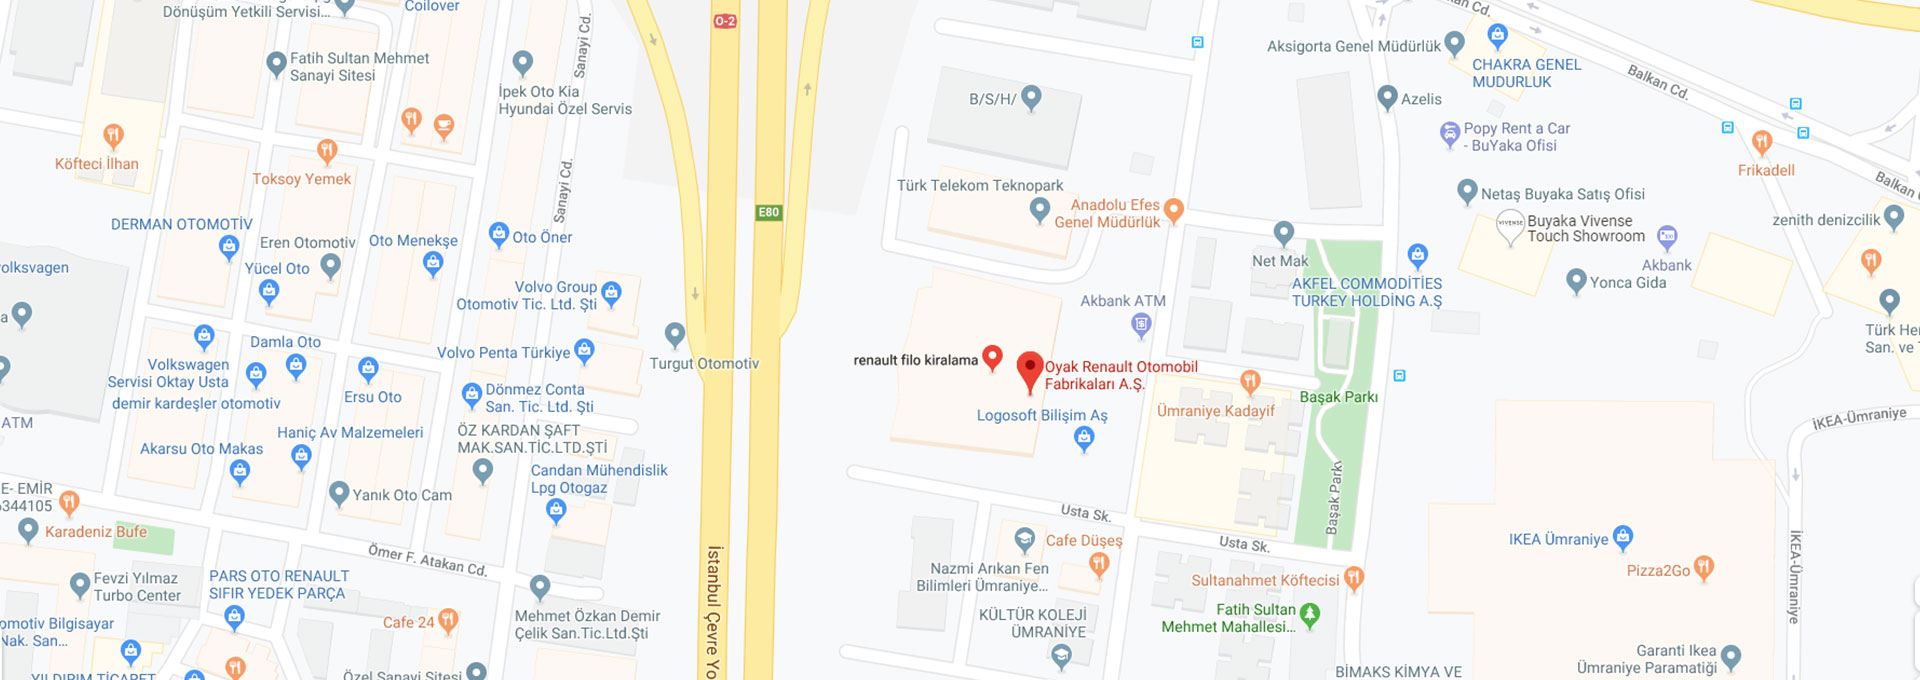 Renault filo kiralama - İletişim - Google Maps